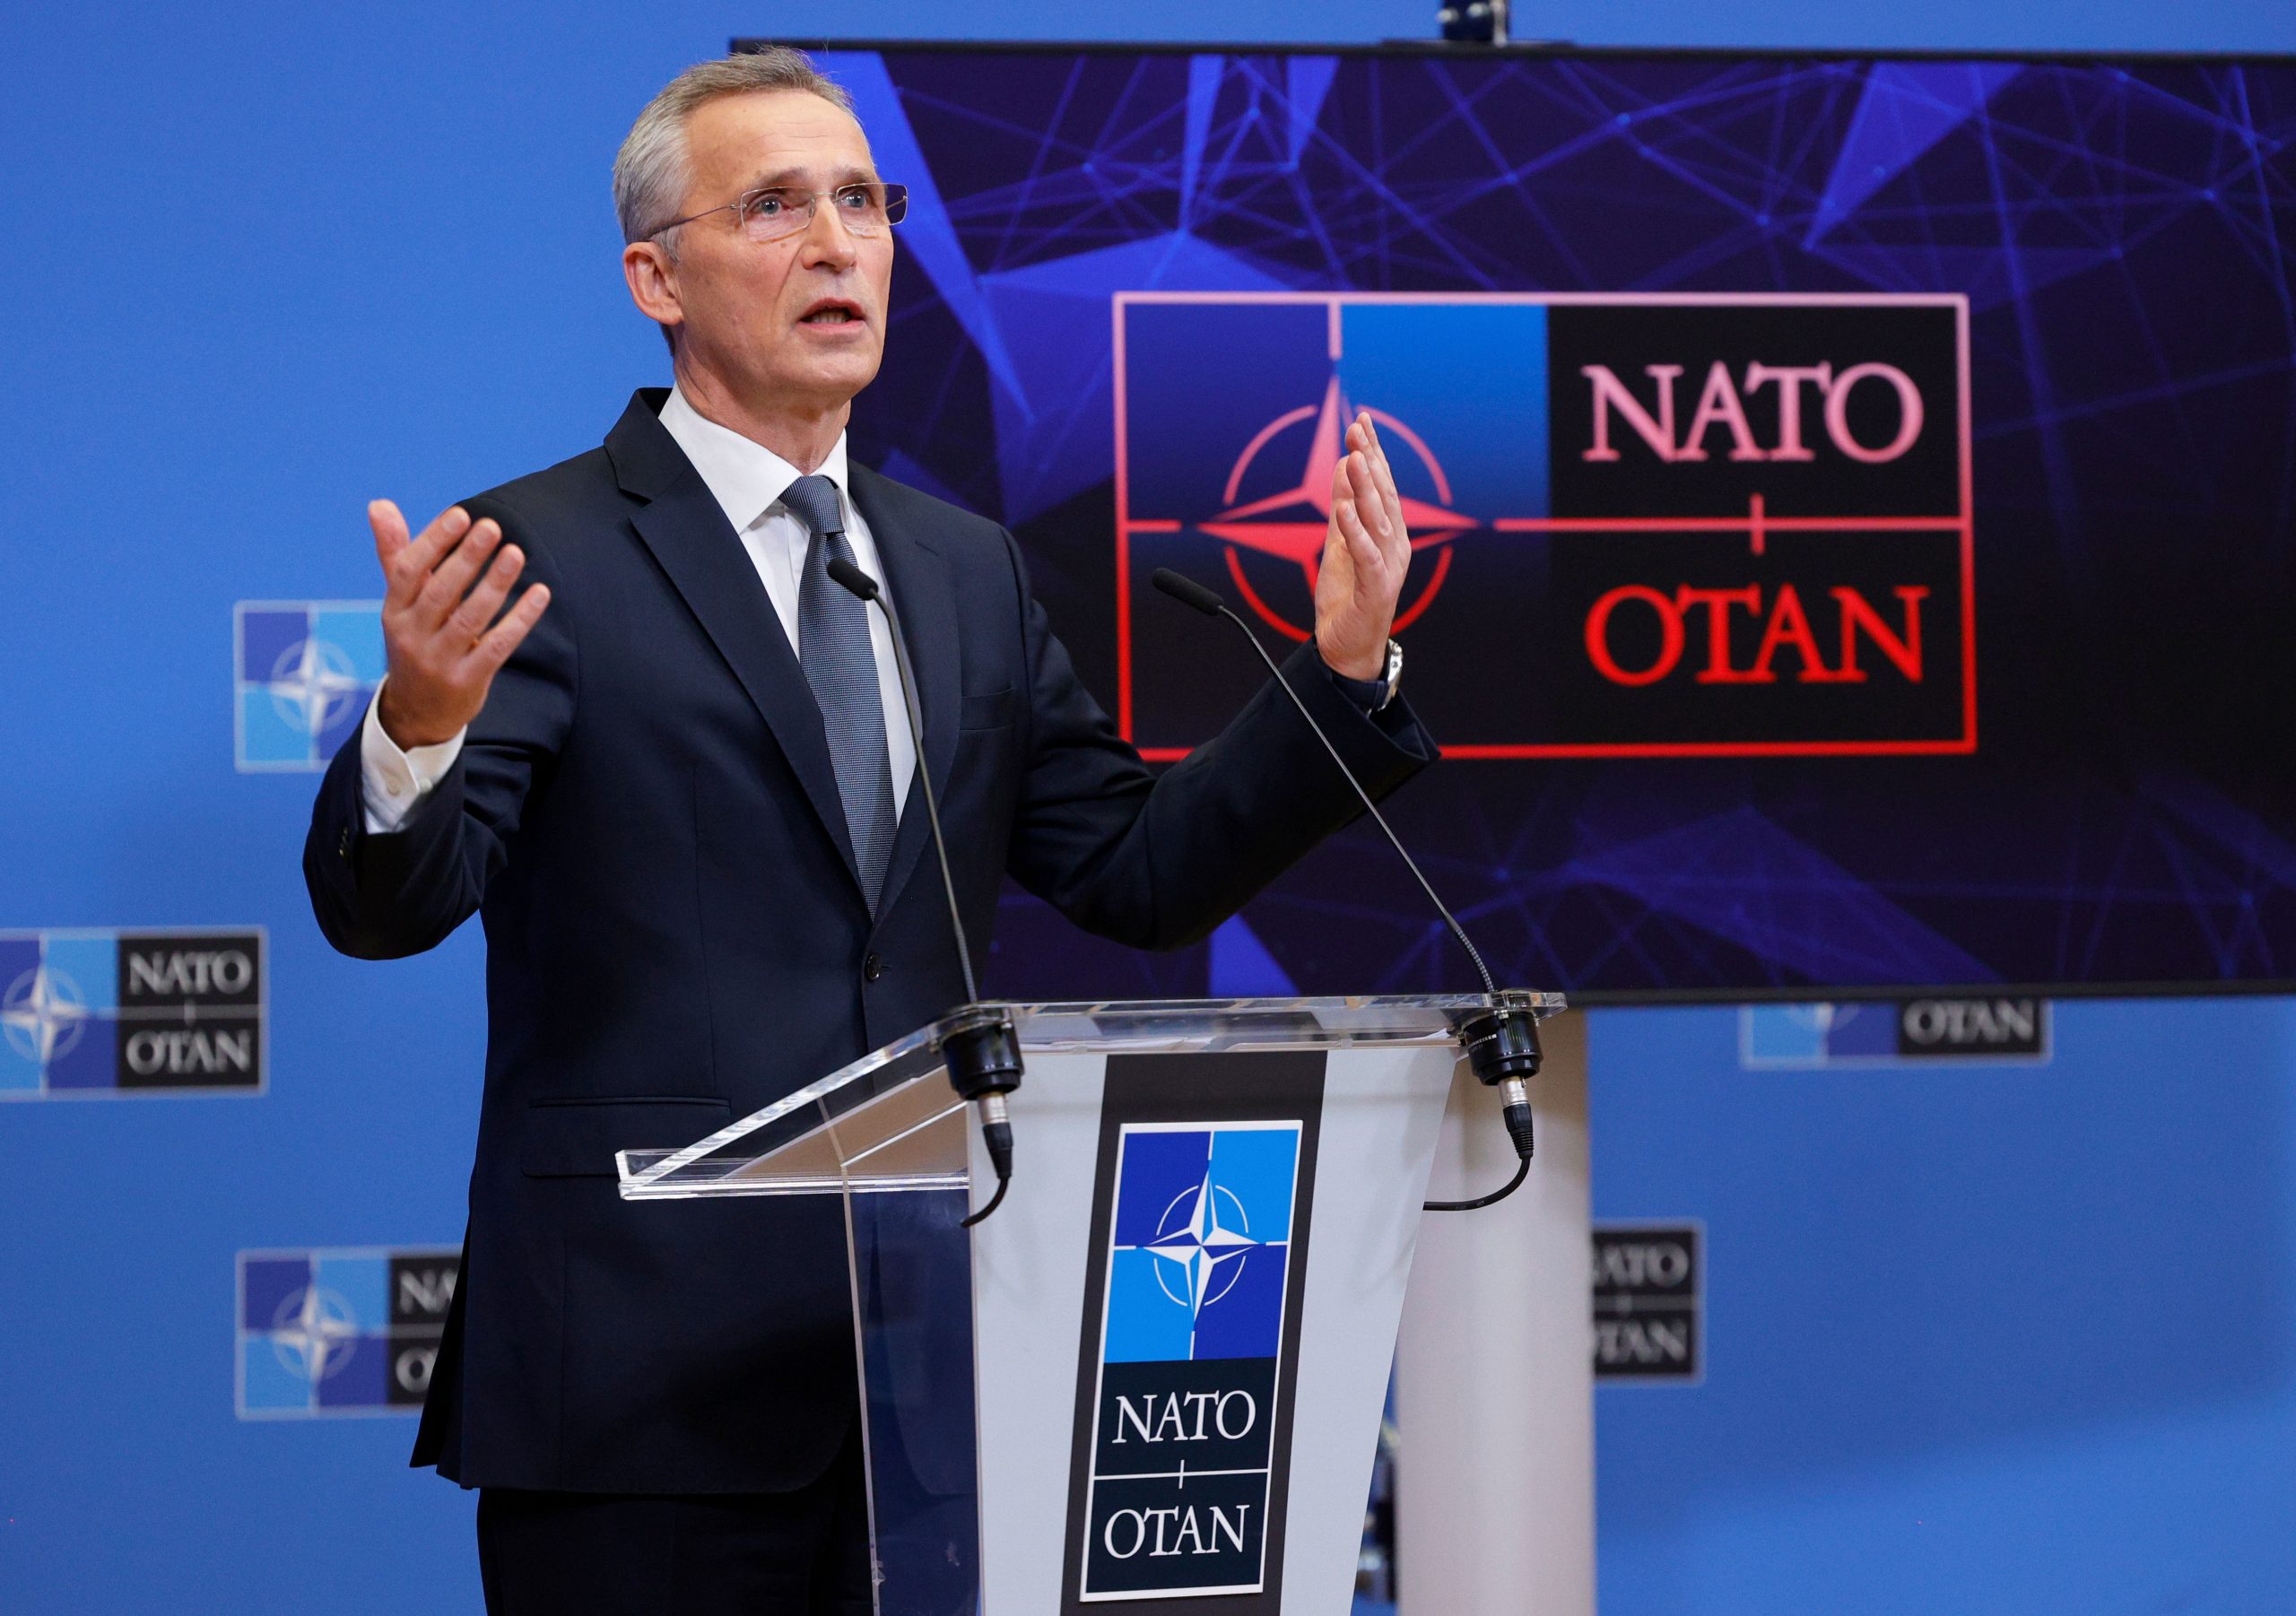 NATO’s responsibility to curb Russian attack on Ukraine: Alliance chief